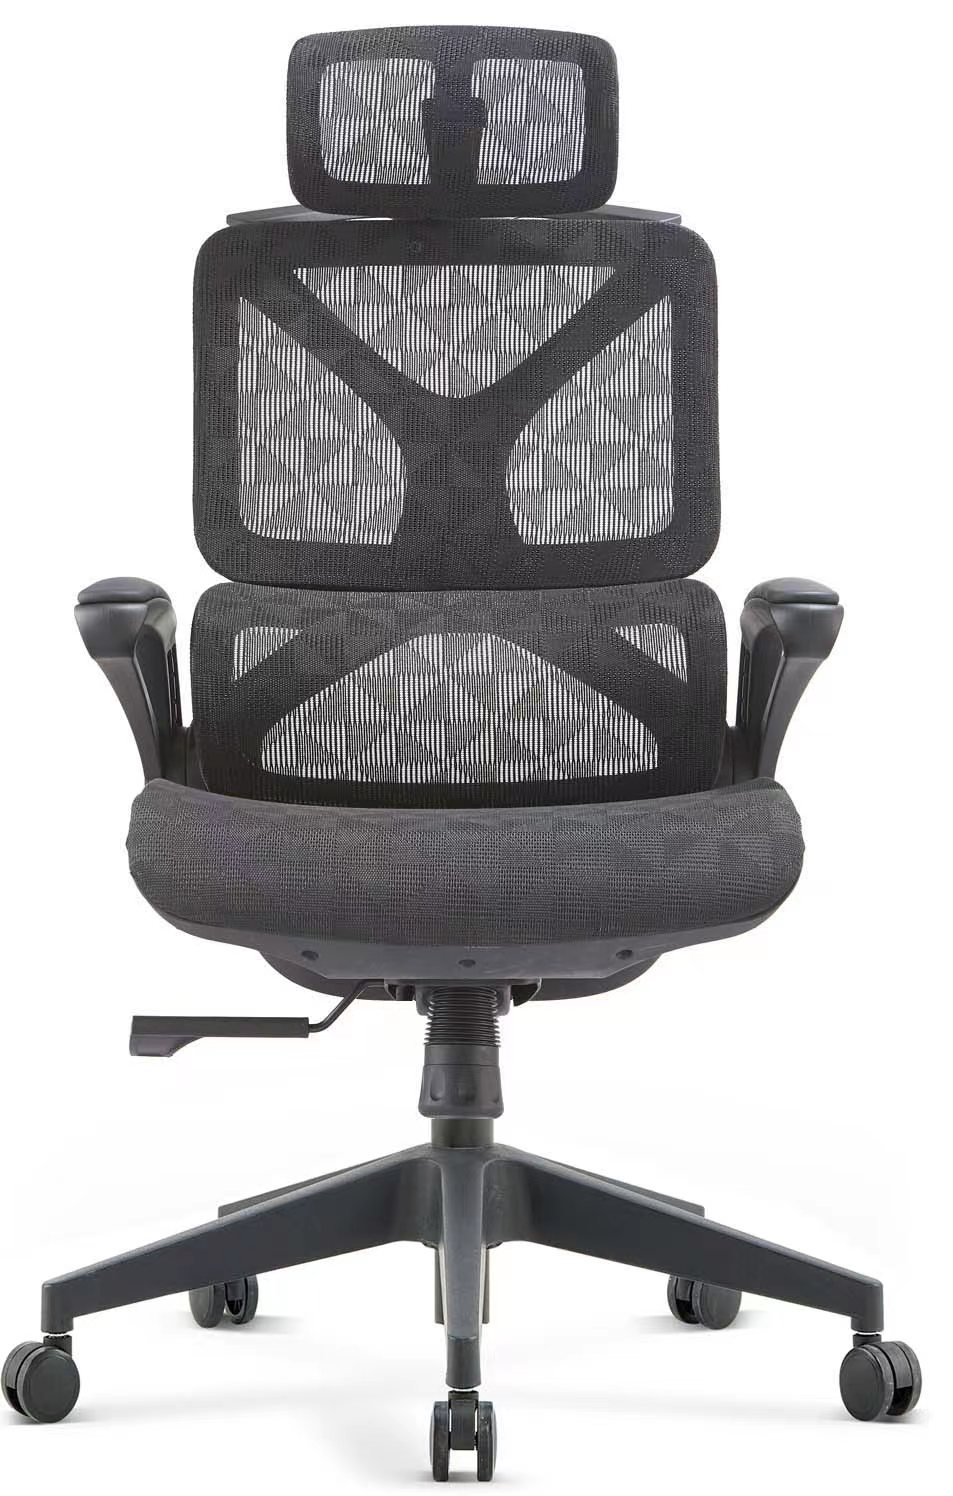 7 Details to choosing an ergonomic office chair